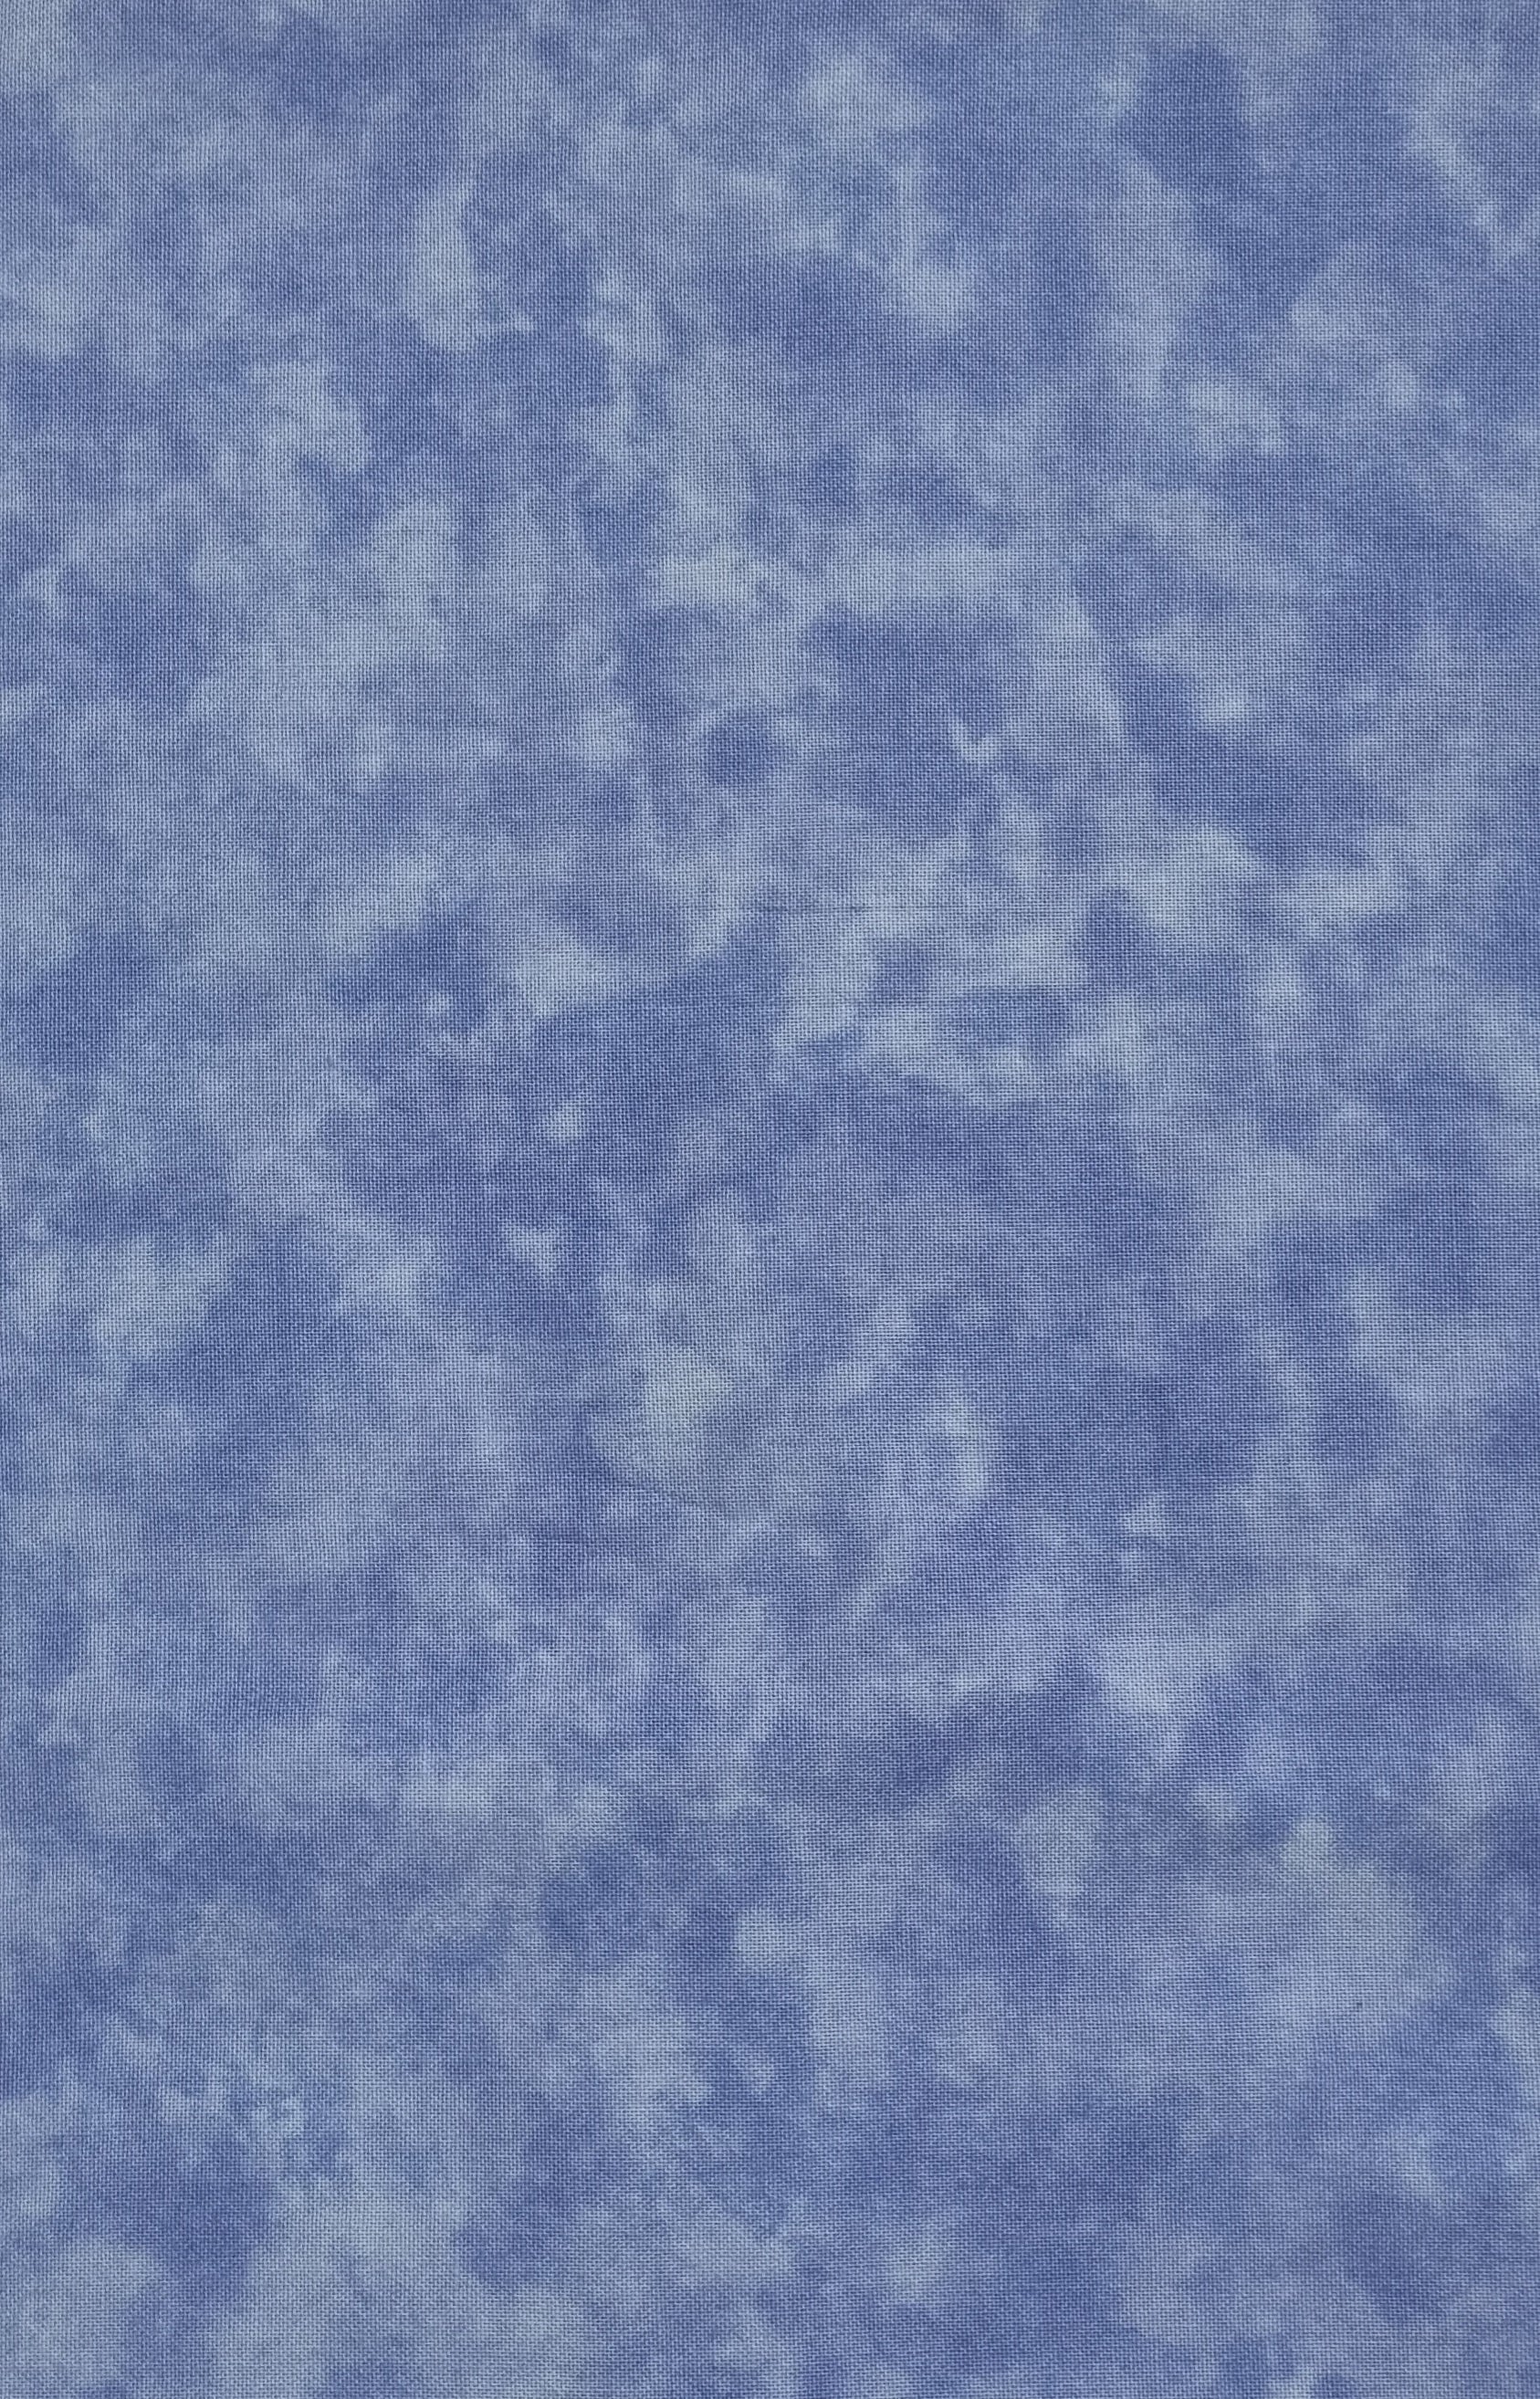 Moda Marble - Cloud Blue 9880-72